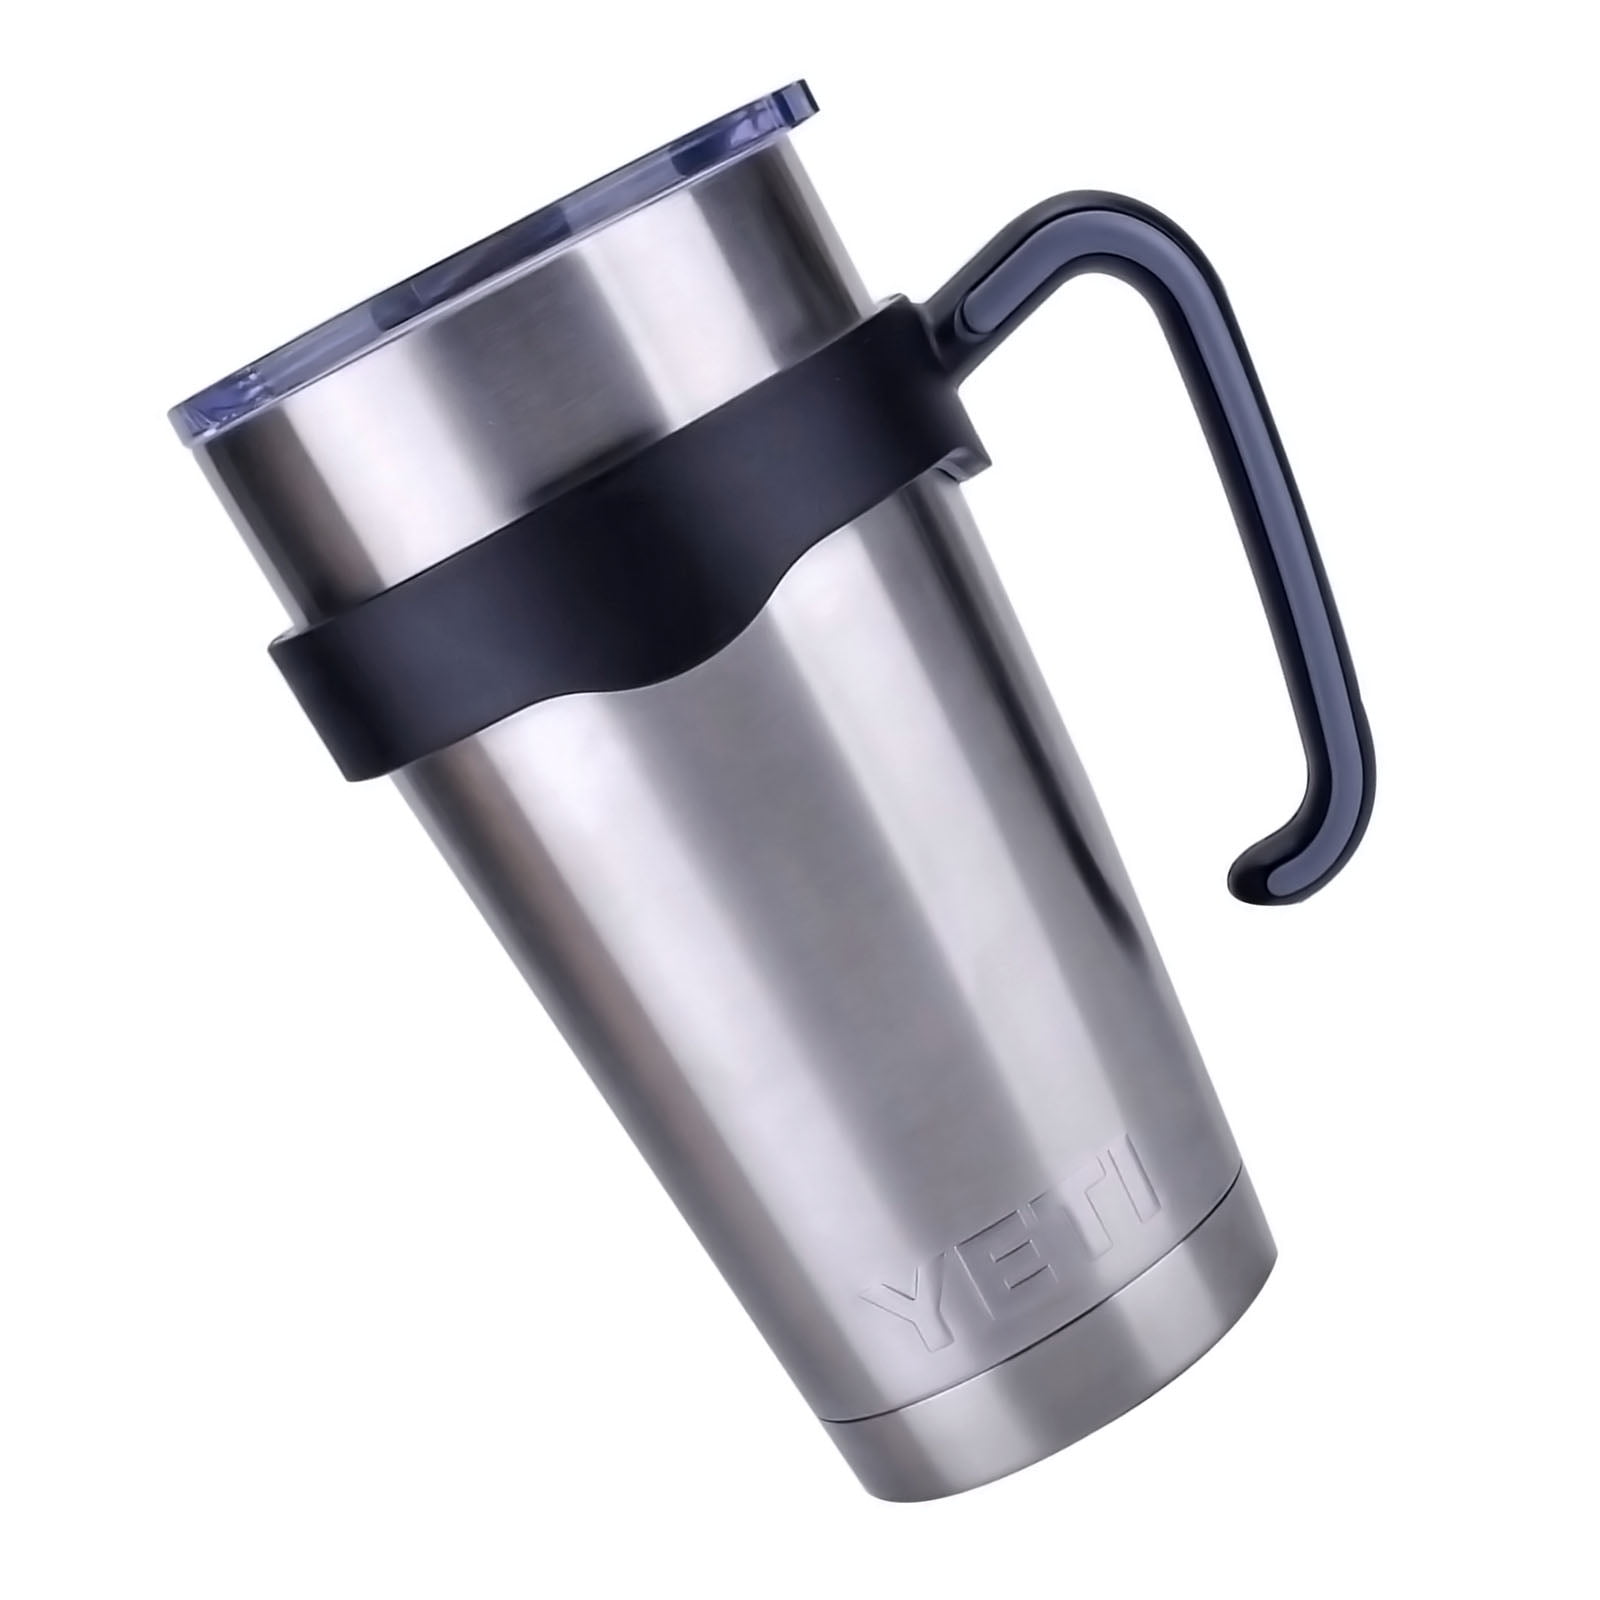 ALIENSX Tumbler Handle for YETI 20oz Rambler Cup, Anti Slip  Travel Mug Grip Cup Holder for Stainless Steel Tumblers, Yeti, Ozark Trail,  Rtic, Sic and More Tumbler Mugs (Black): Tumblers